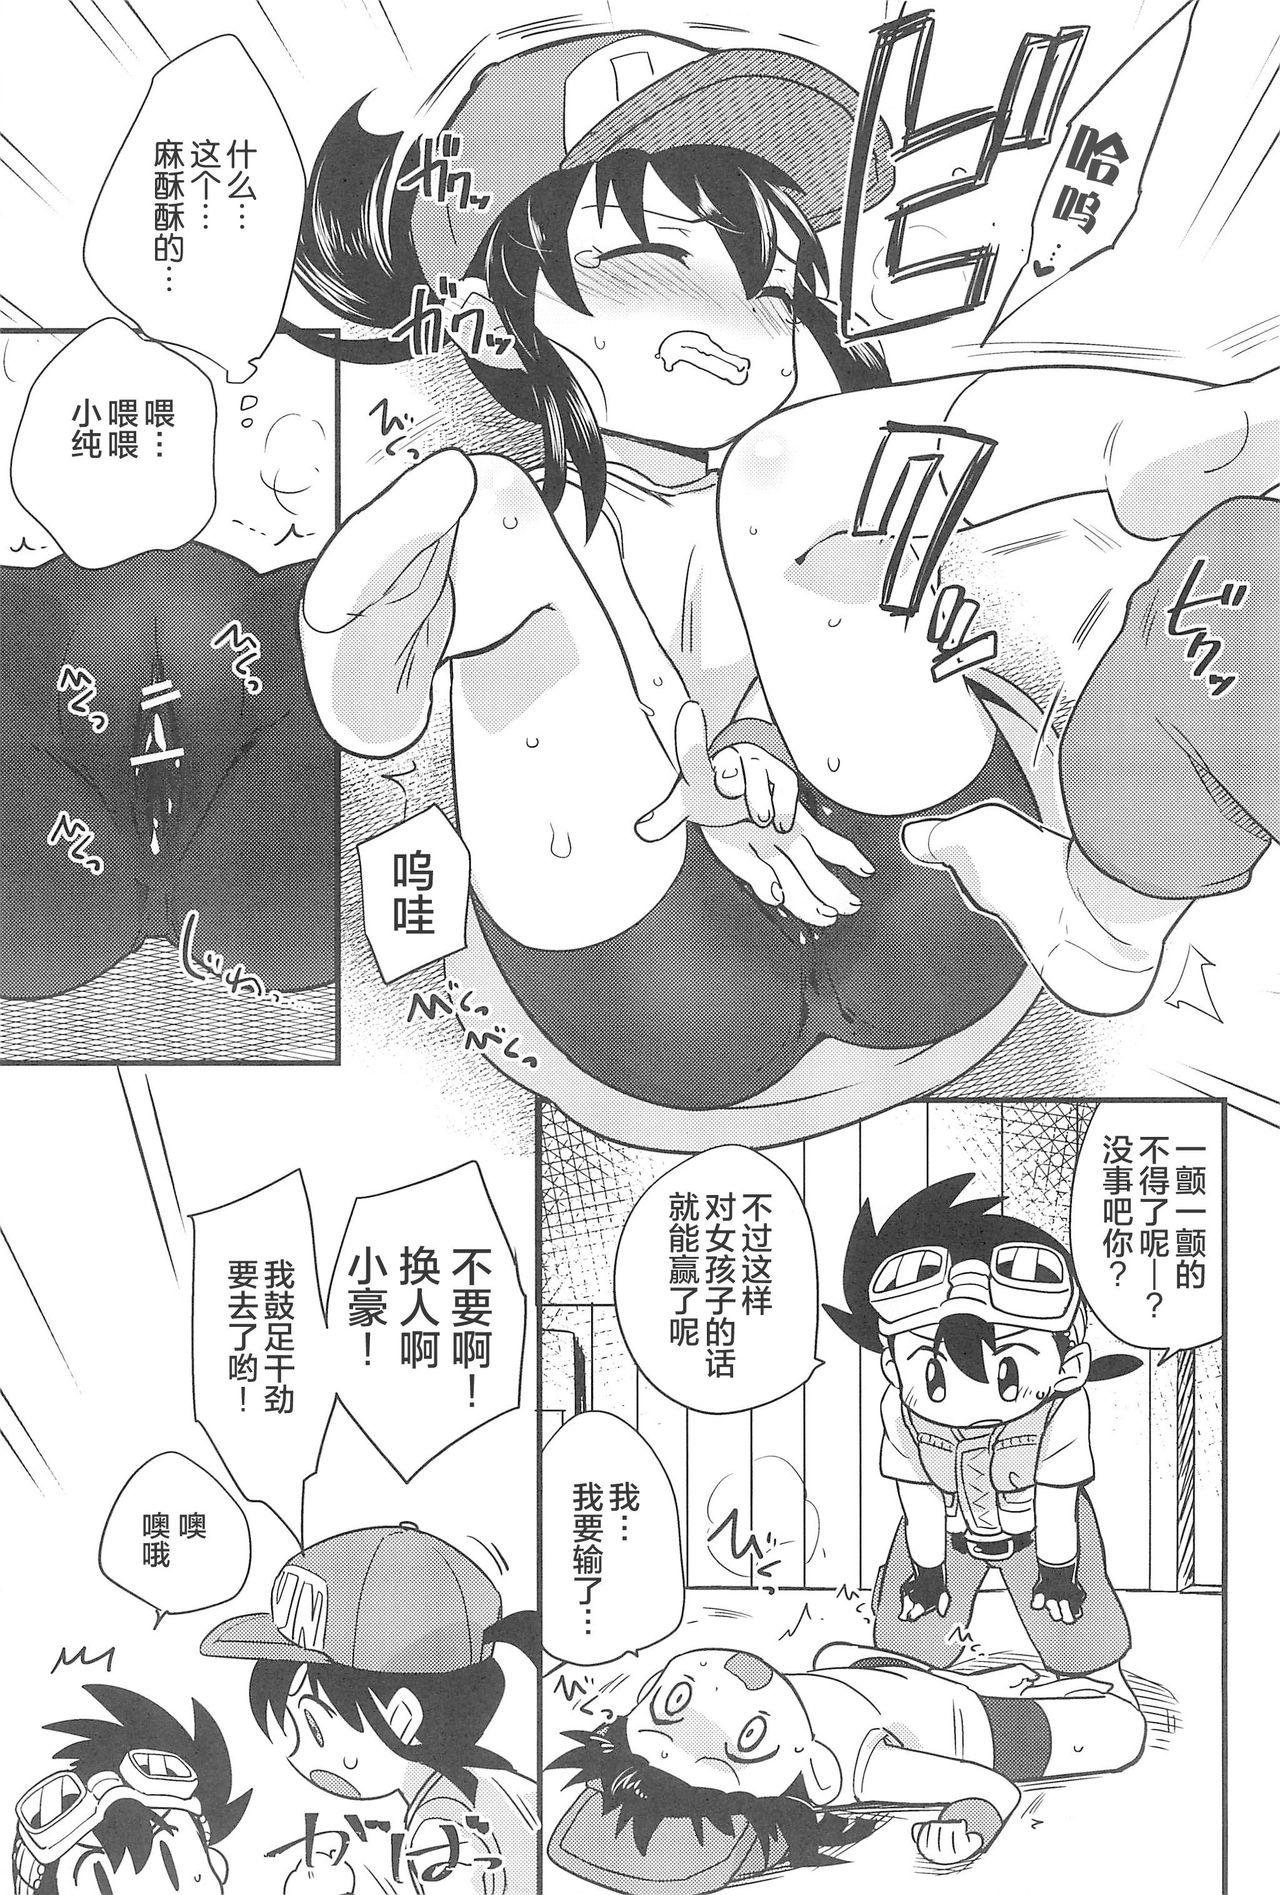 Cut Denki no Chikaratte Sugee! - Bakusou kyoudai lets and go Twerk - Page 9